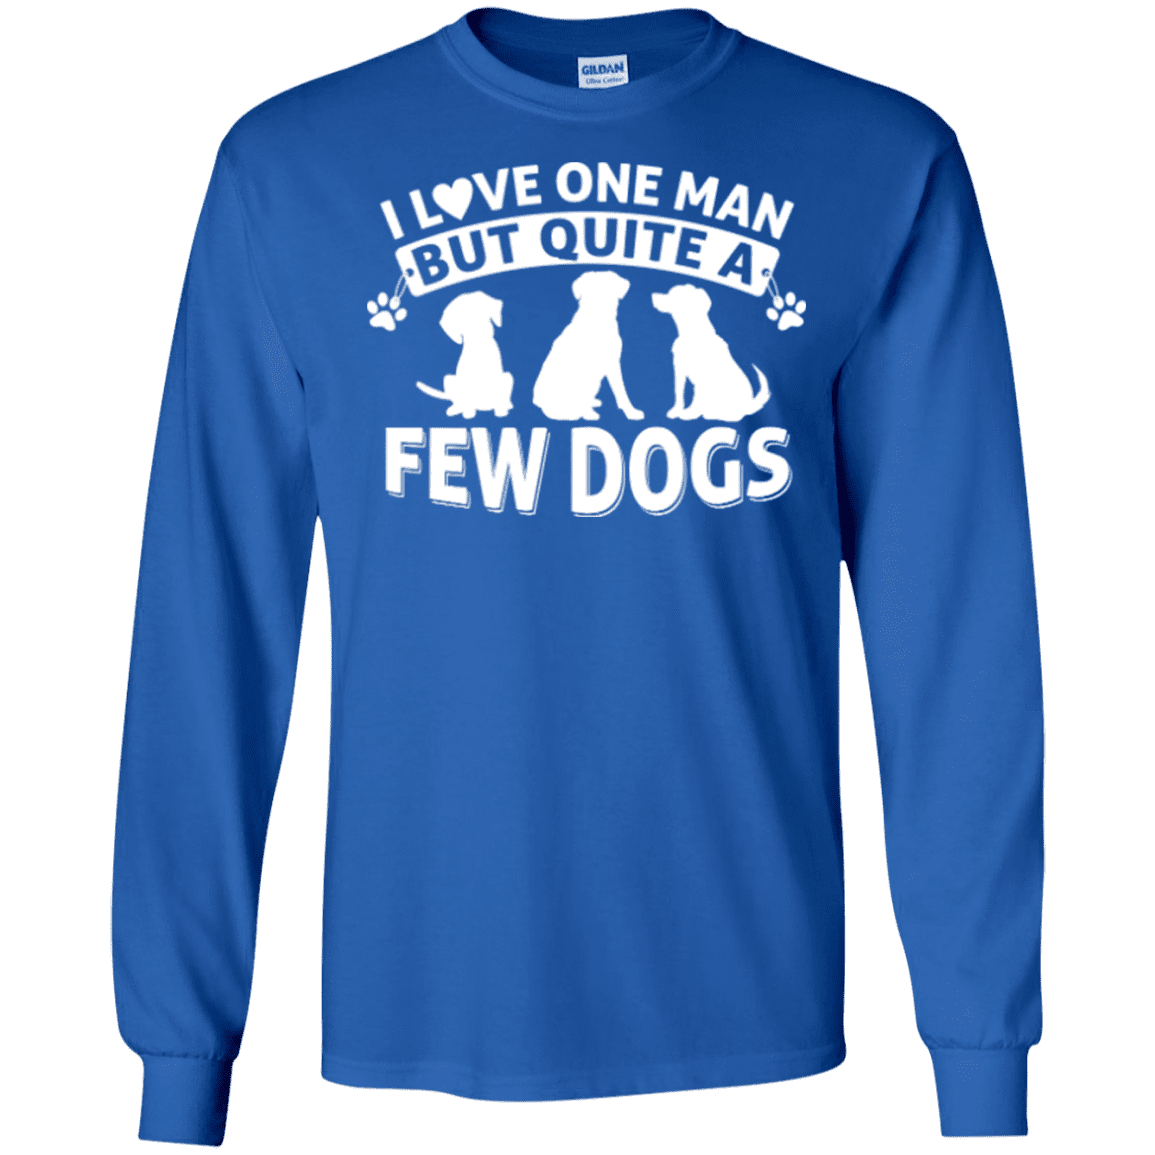 I Love One Man & A Few Dogs - Long Sleeve T Shirt.